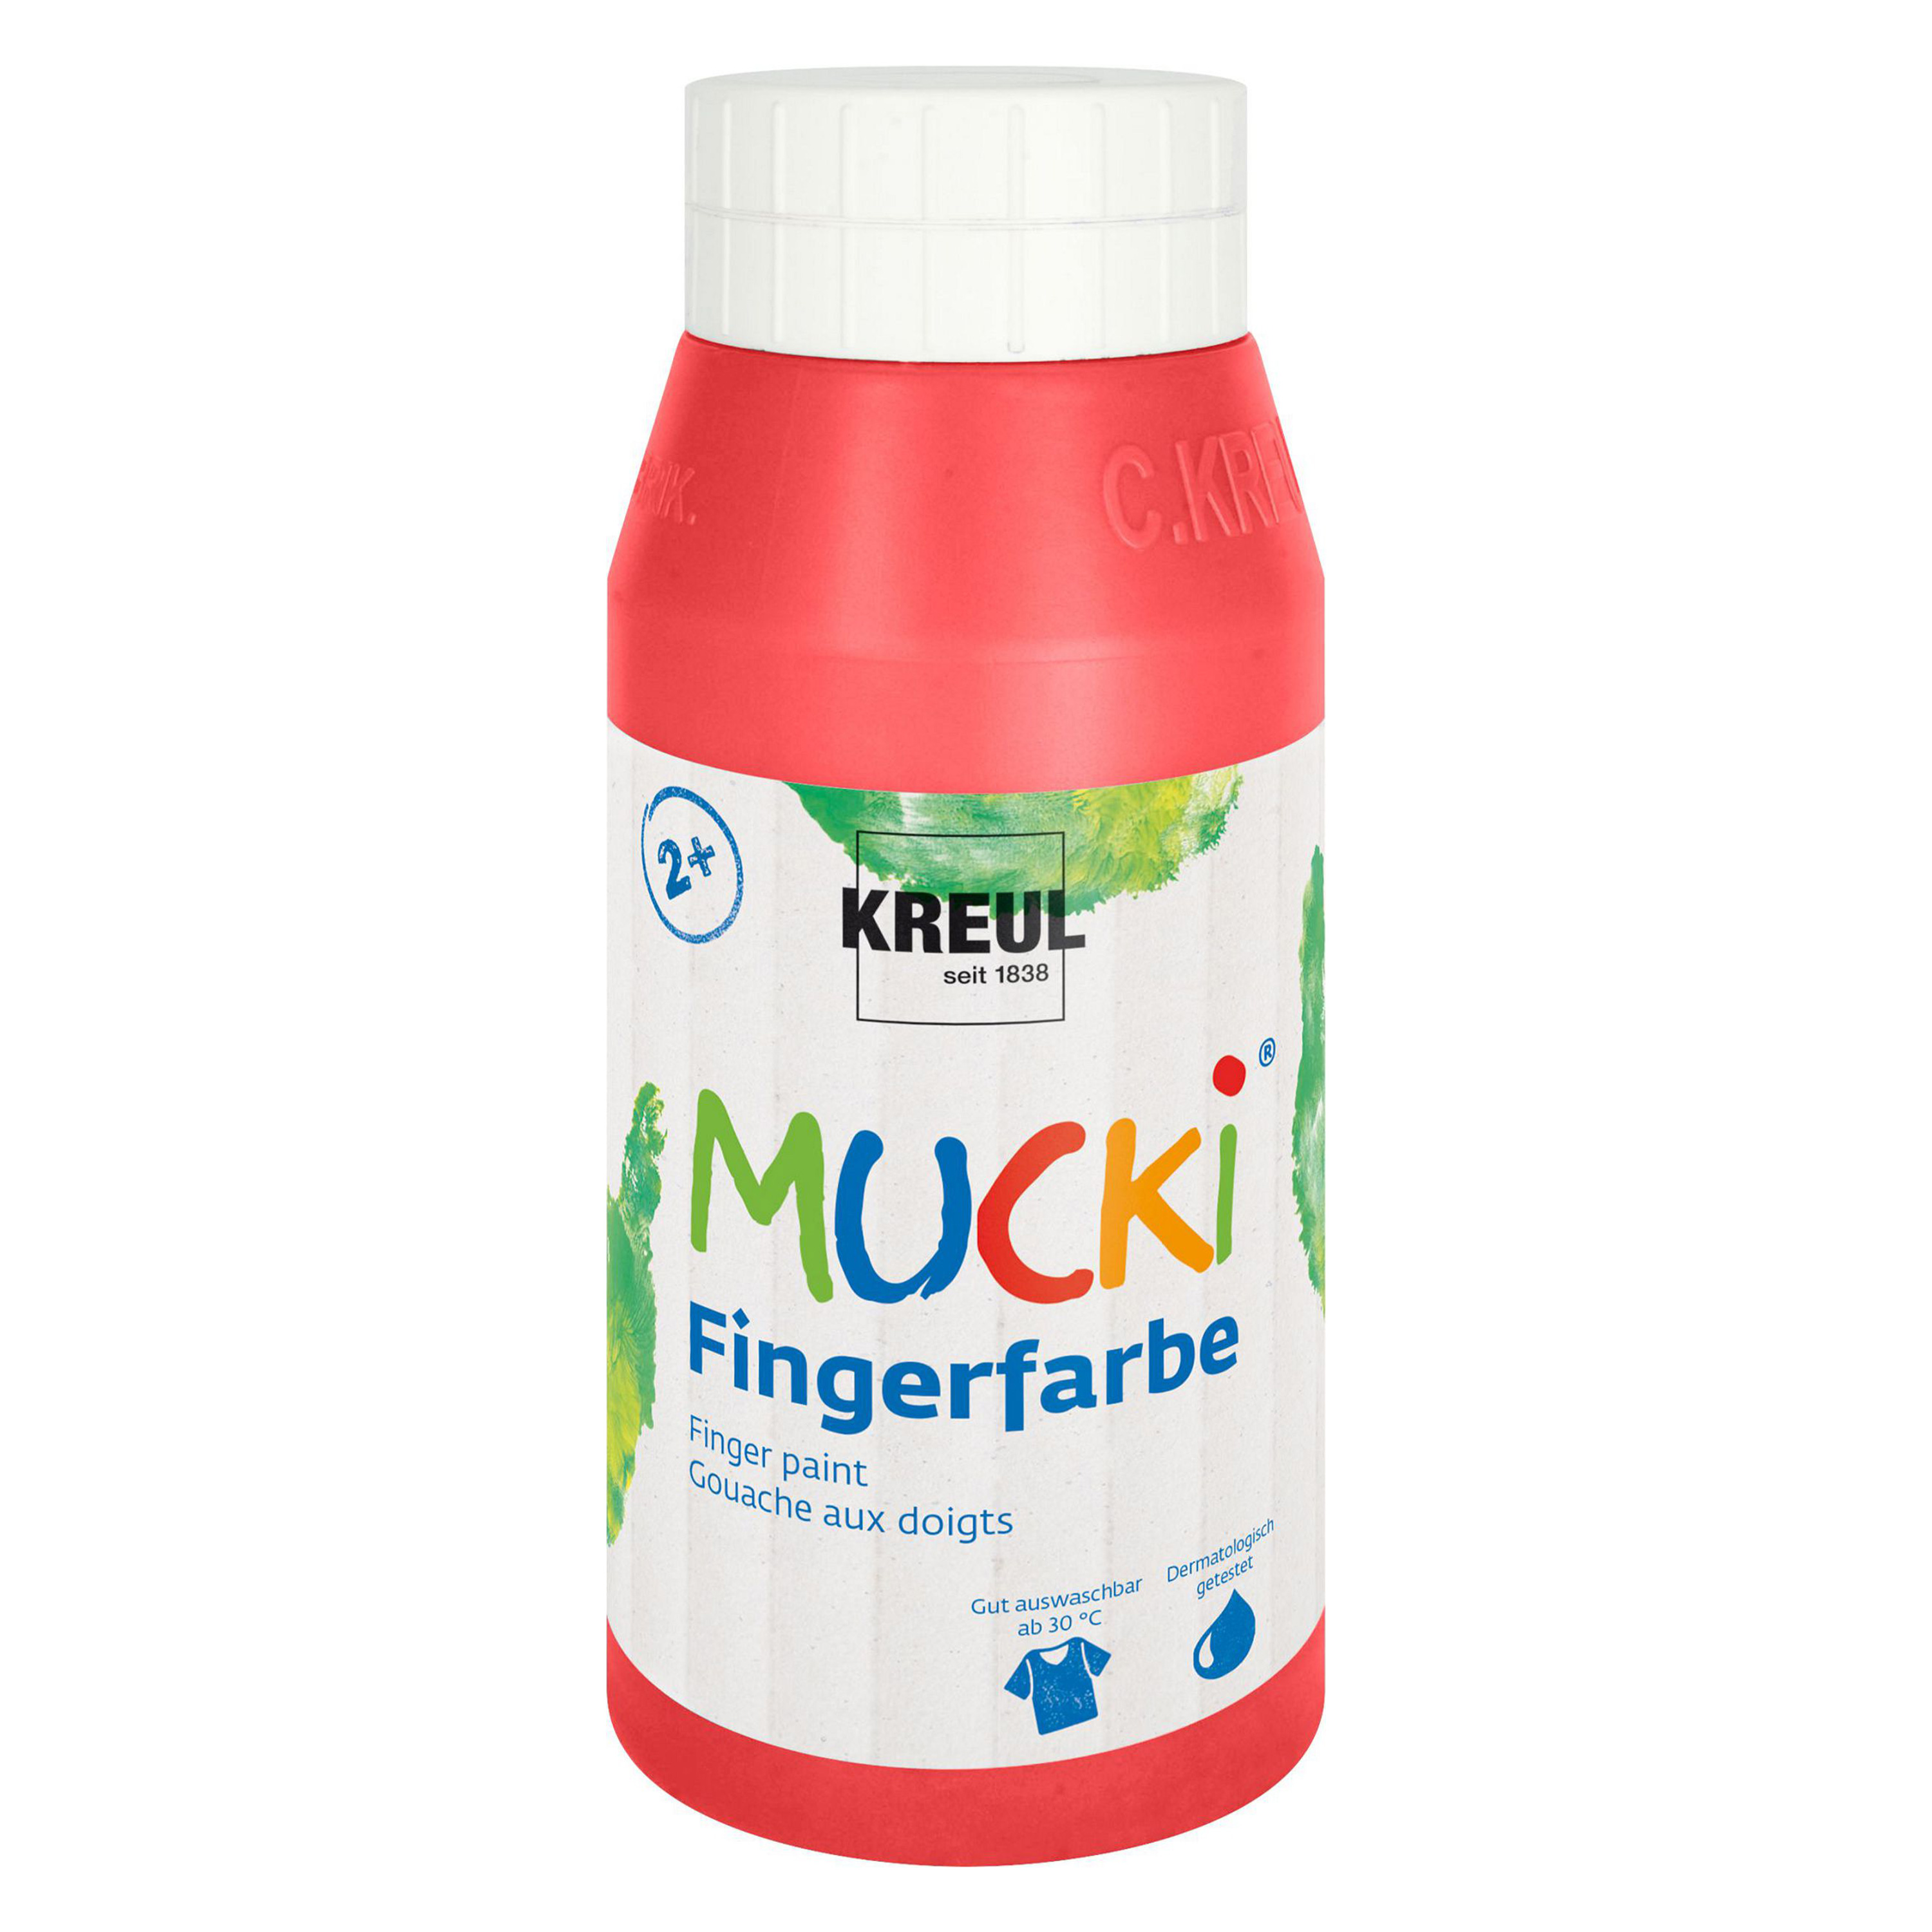 MUCKI Fingerfarbe, 750 ml, rot